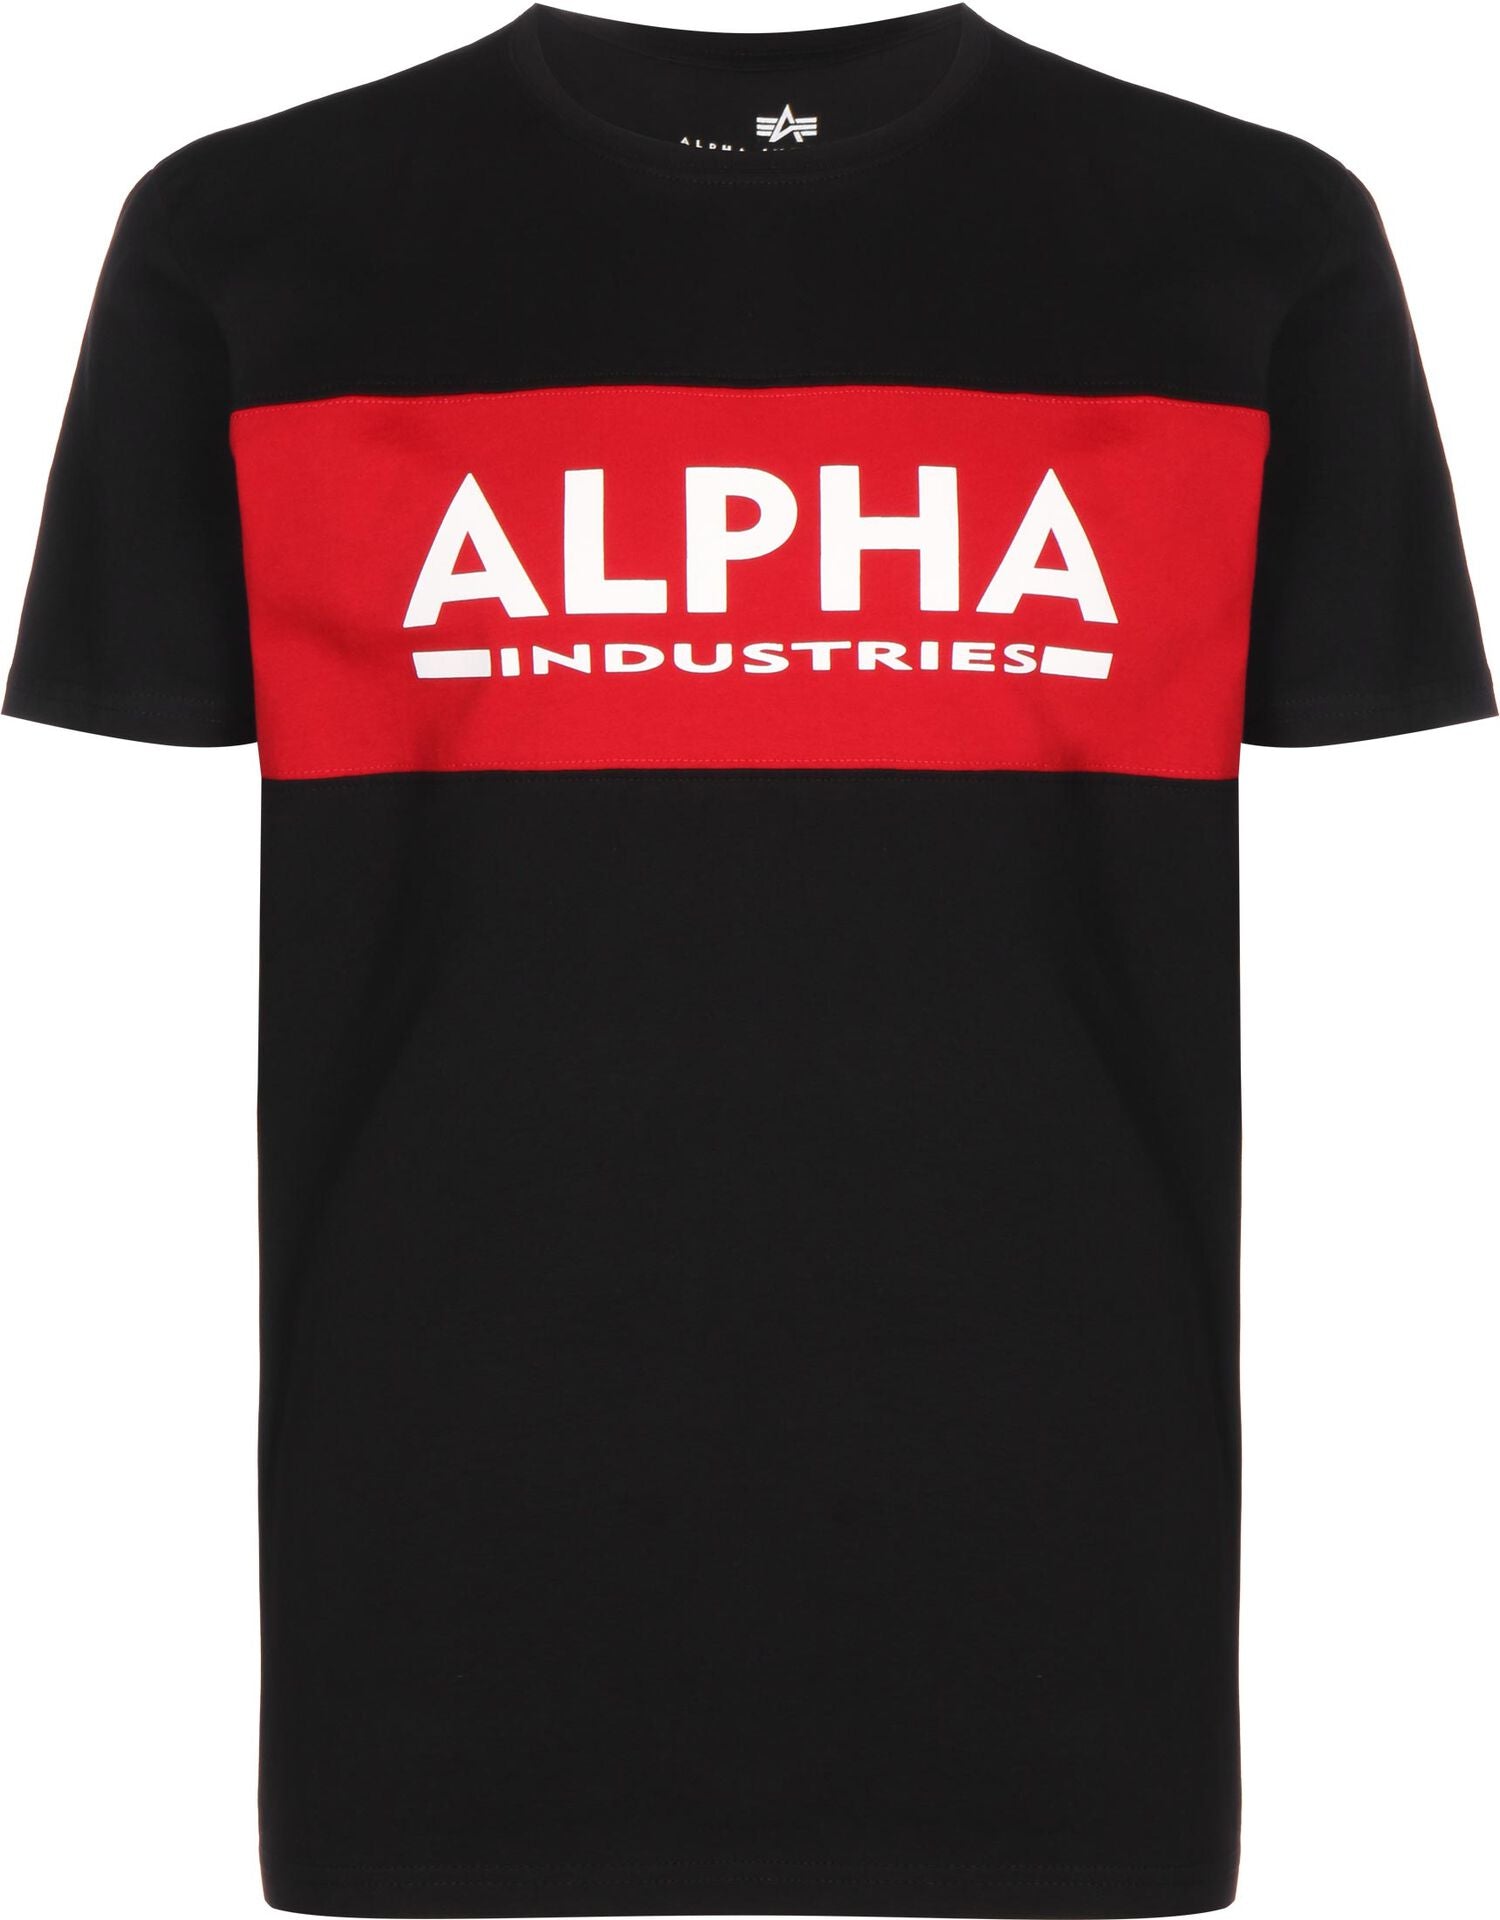 Alpha Industries Alpha Inlay T-Shirt, Black/Red